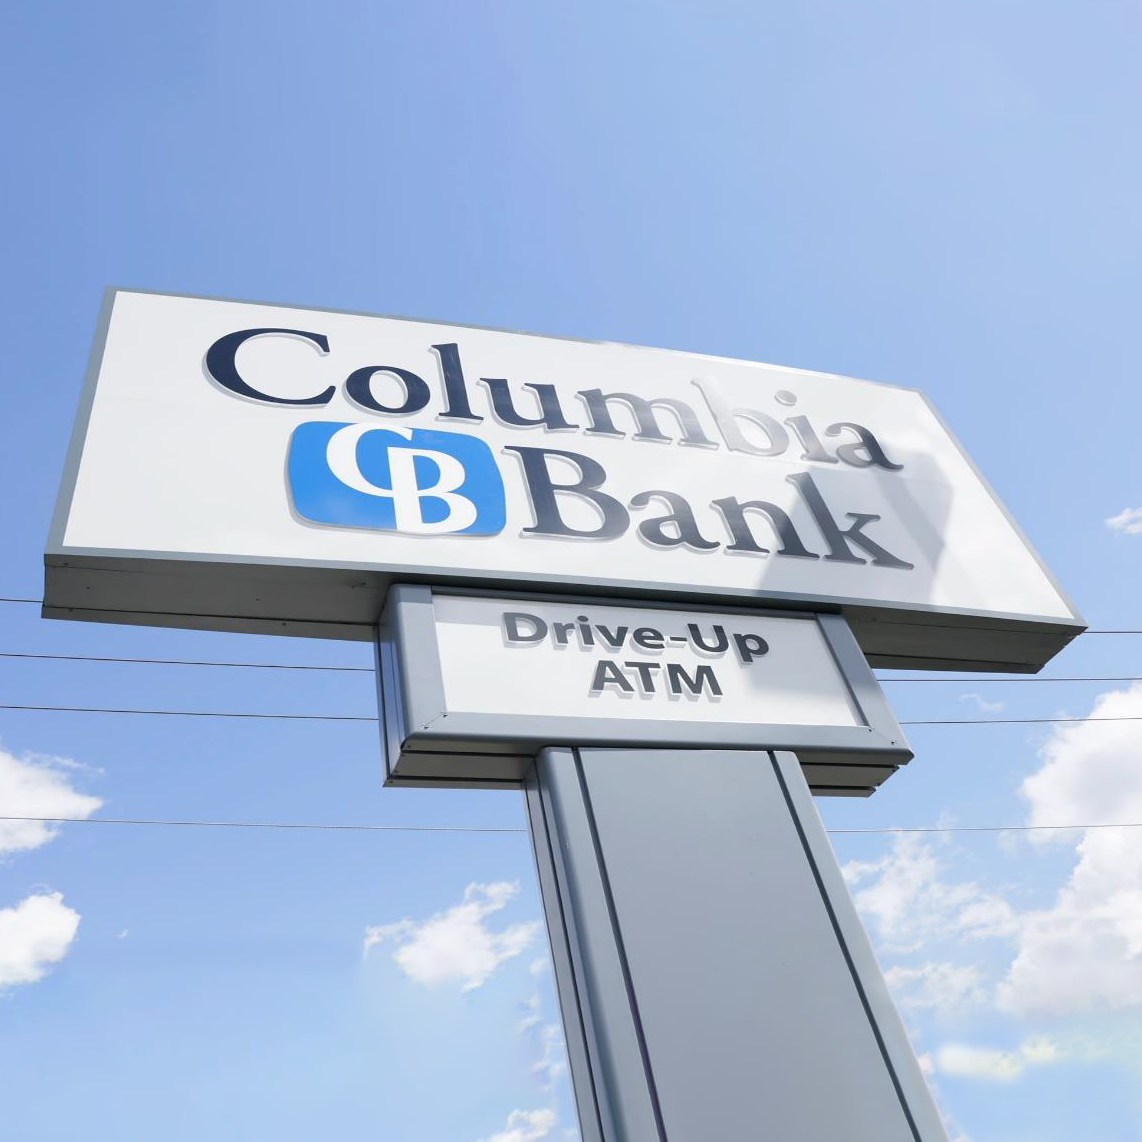 Case_Bank_HTA_Columbia-Bank_US-6